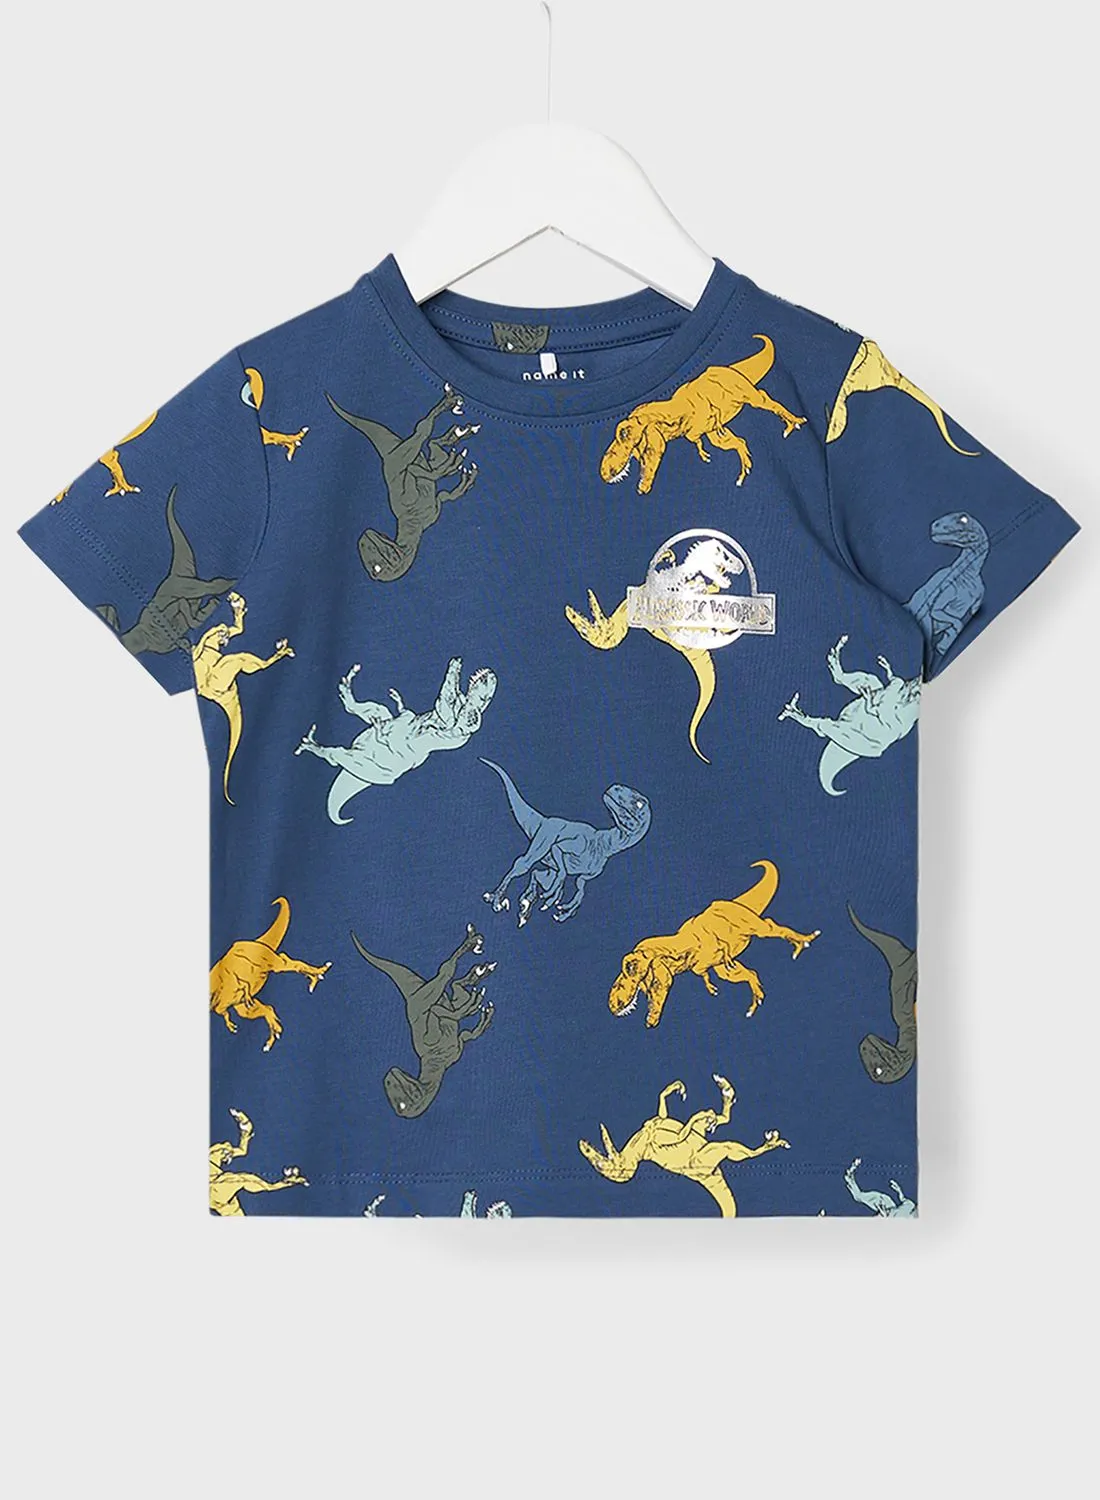 NAME IT Kids Jurassic World T-Shirt